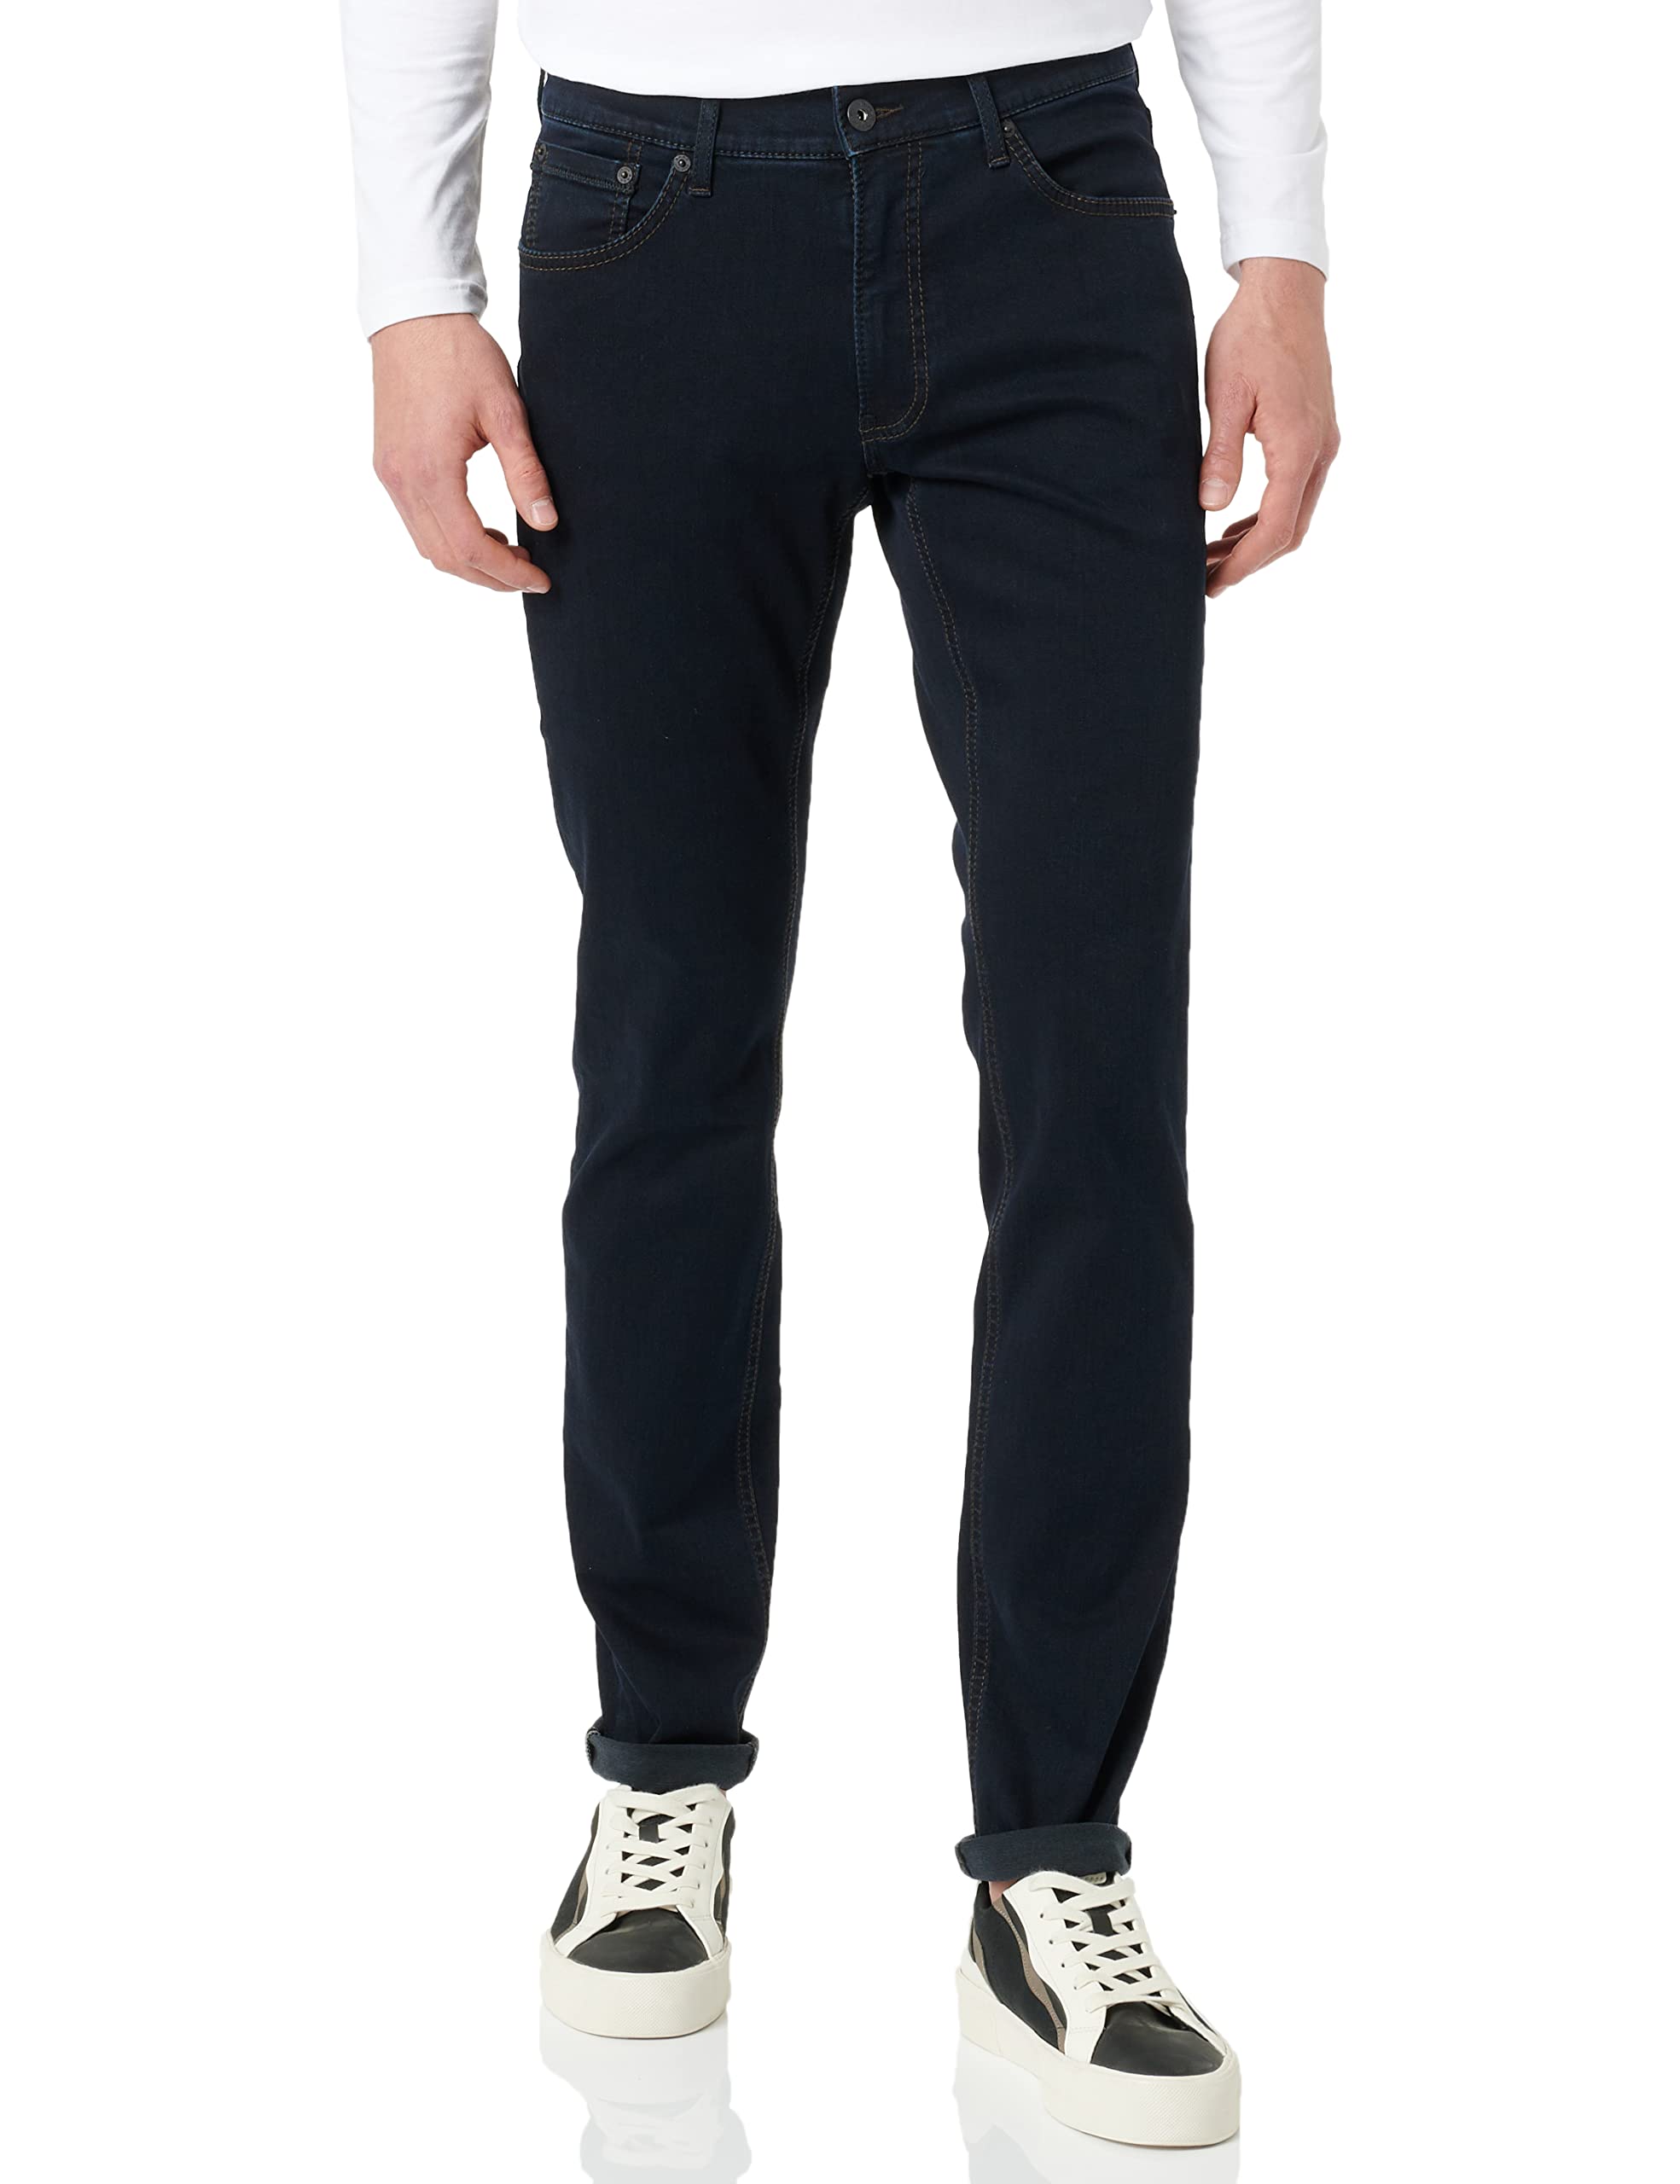 BRAX Herren Slim Fit Jeans Hose Style Chuck Hi-Flex Stretch Baumwolle, RAW BLUE, 31W / 32L